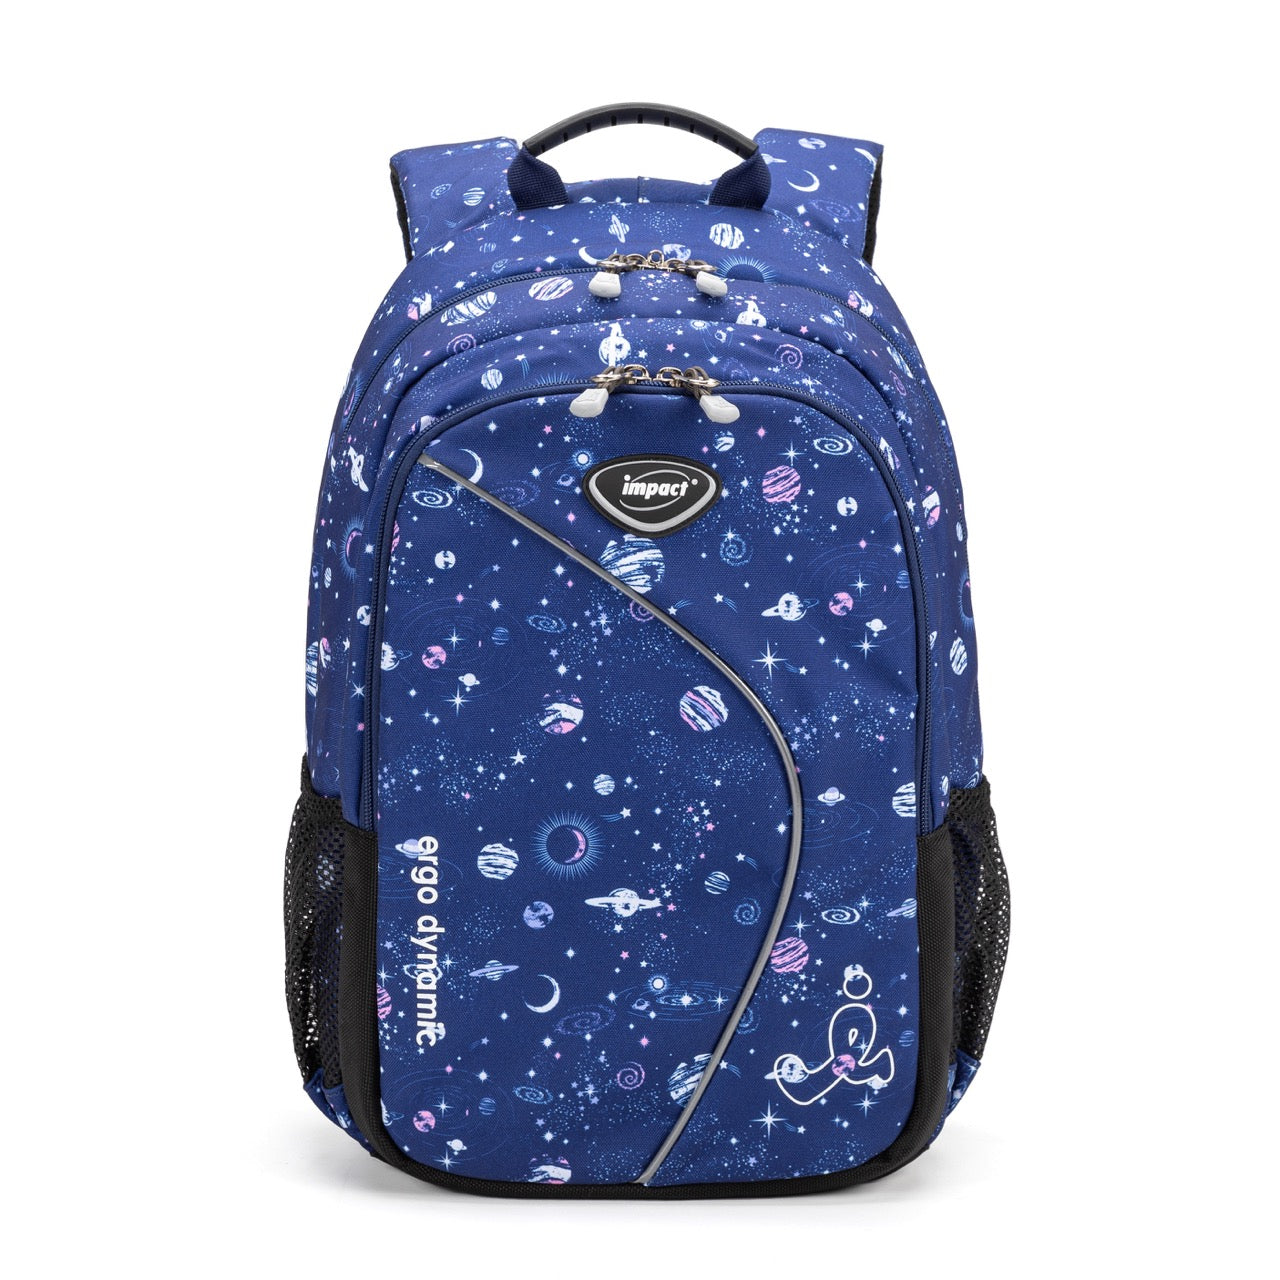 IMPACT - IPEG-158 Ergo-Comfort Spinal Support School Backpack for Kids